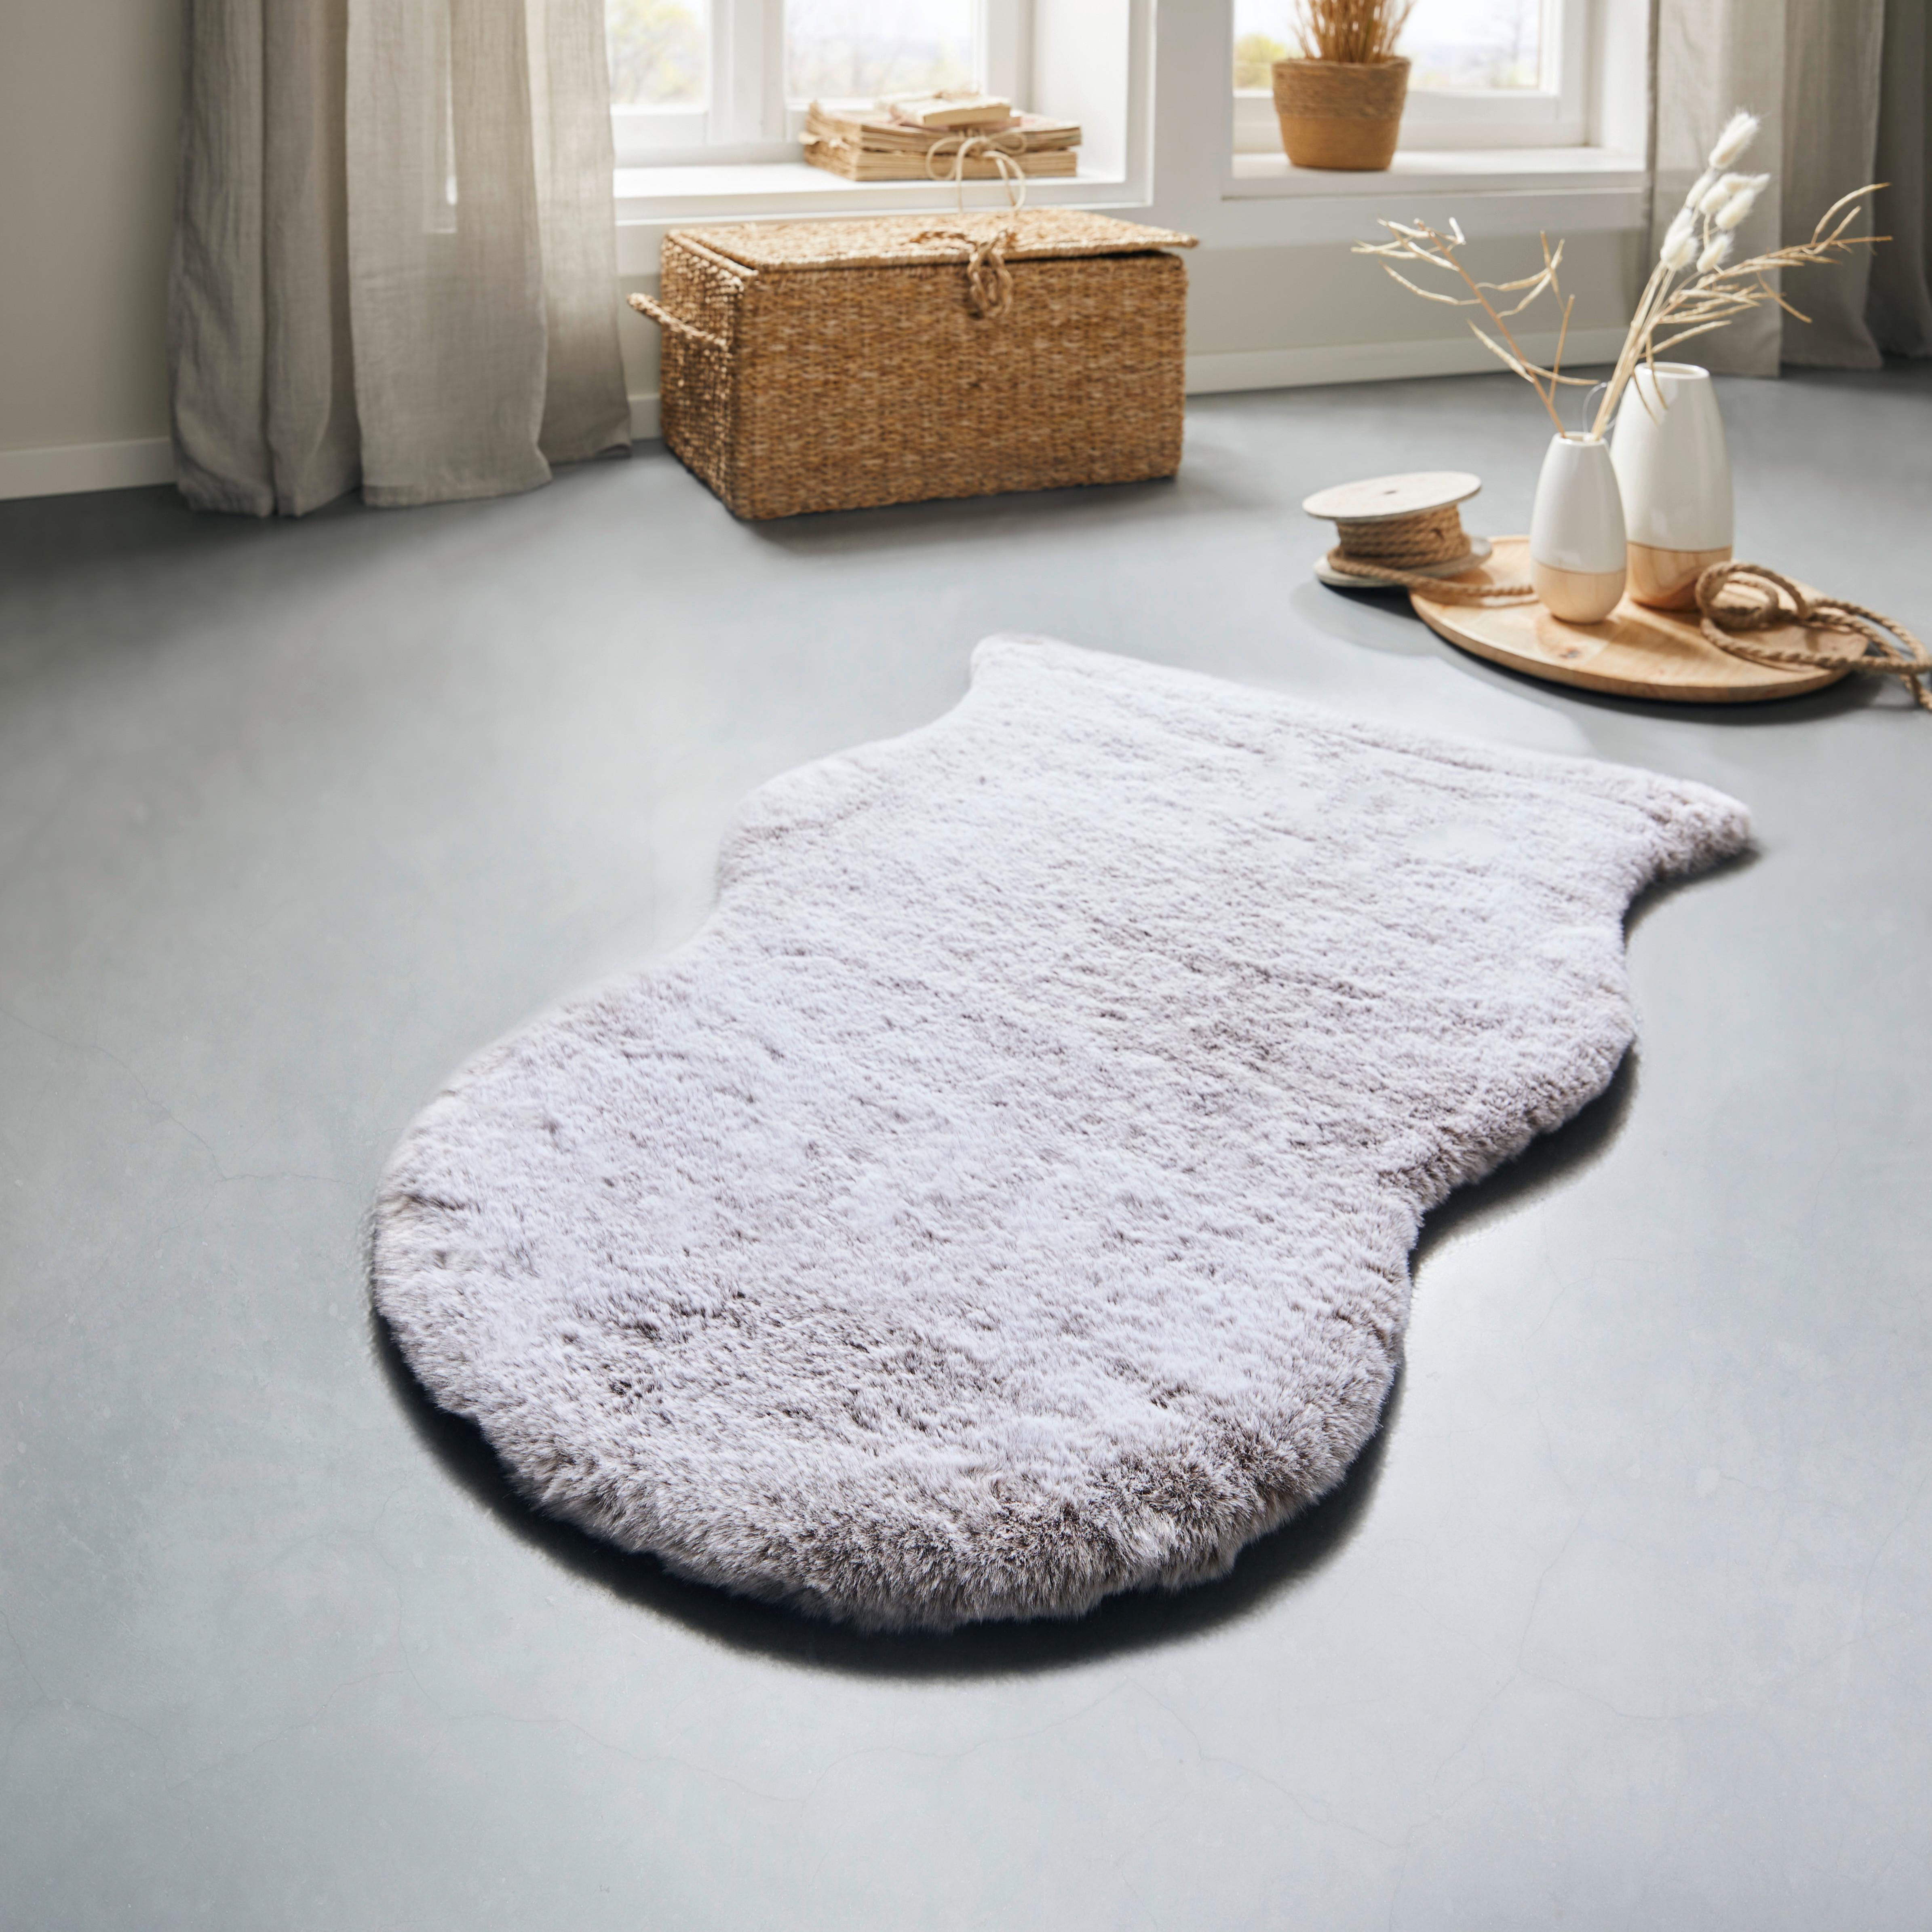 Umjetno Krzno Mia - bijela/smeđa, Modern, tekstil (55/80cm) - Modern Living